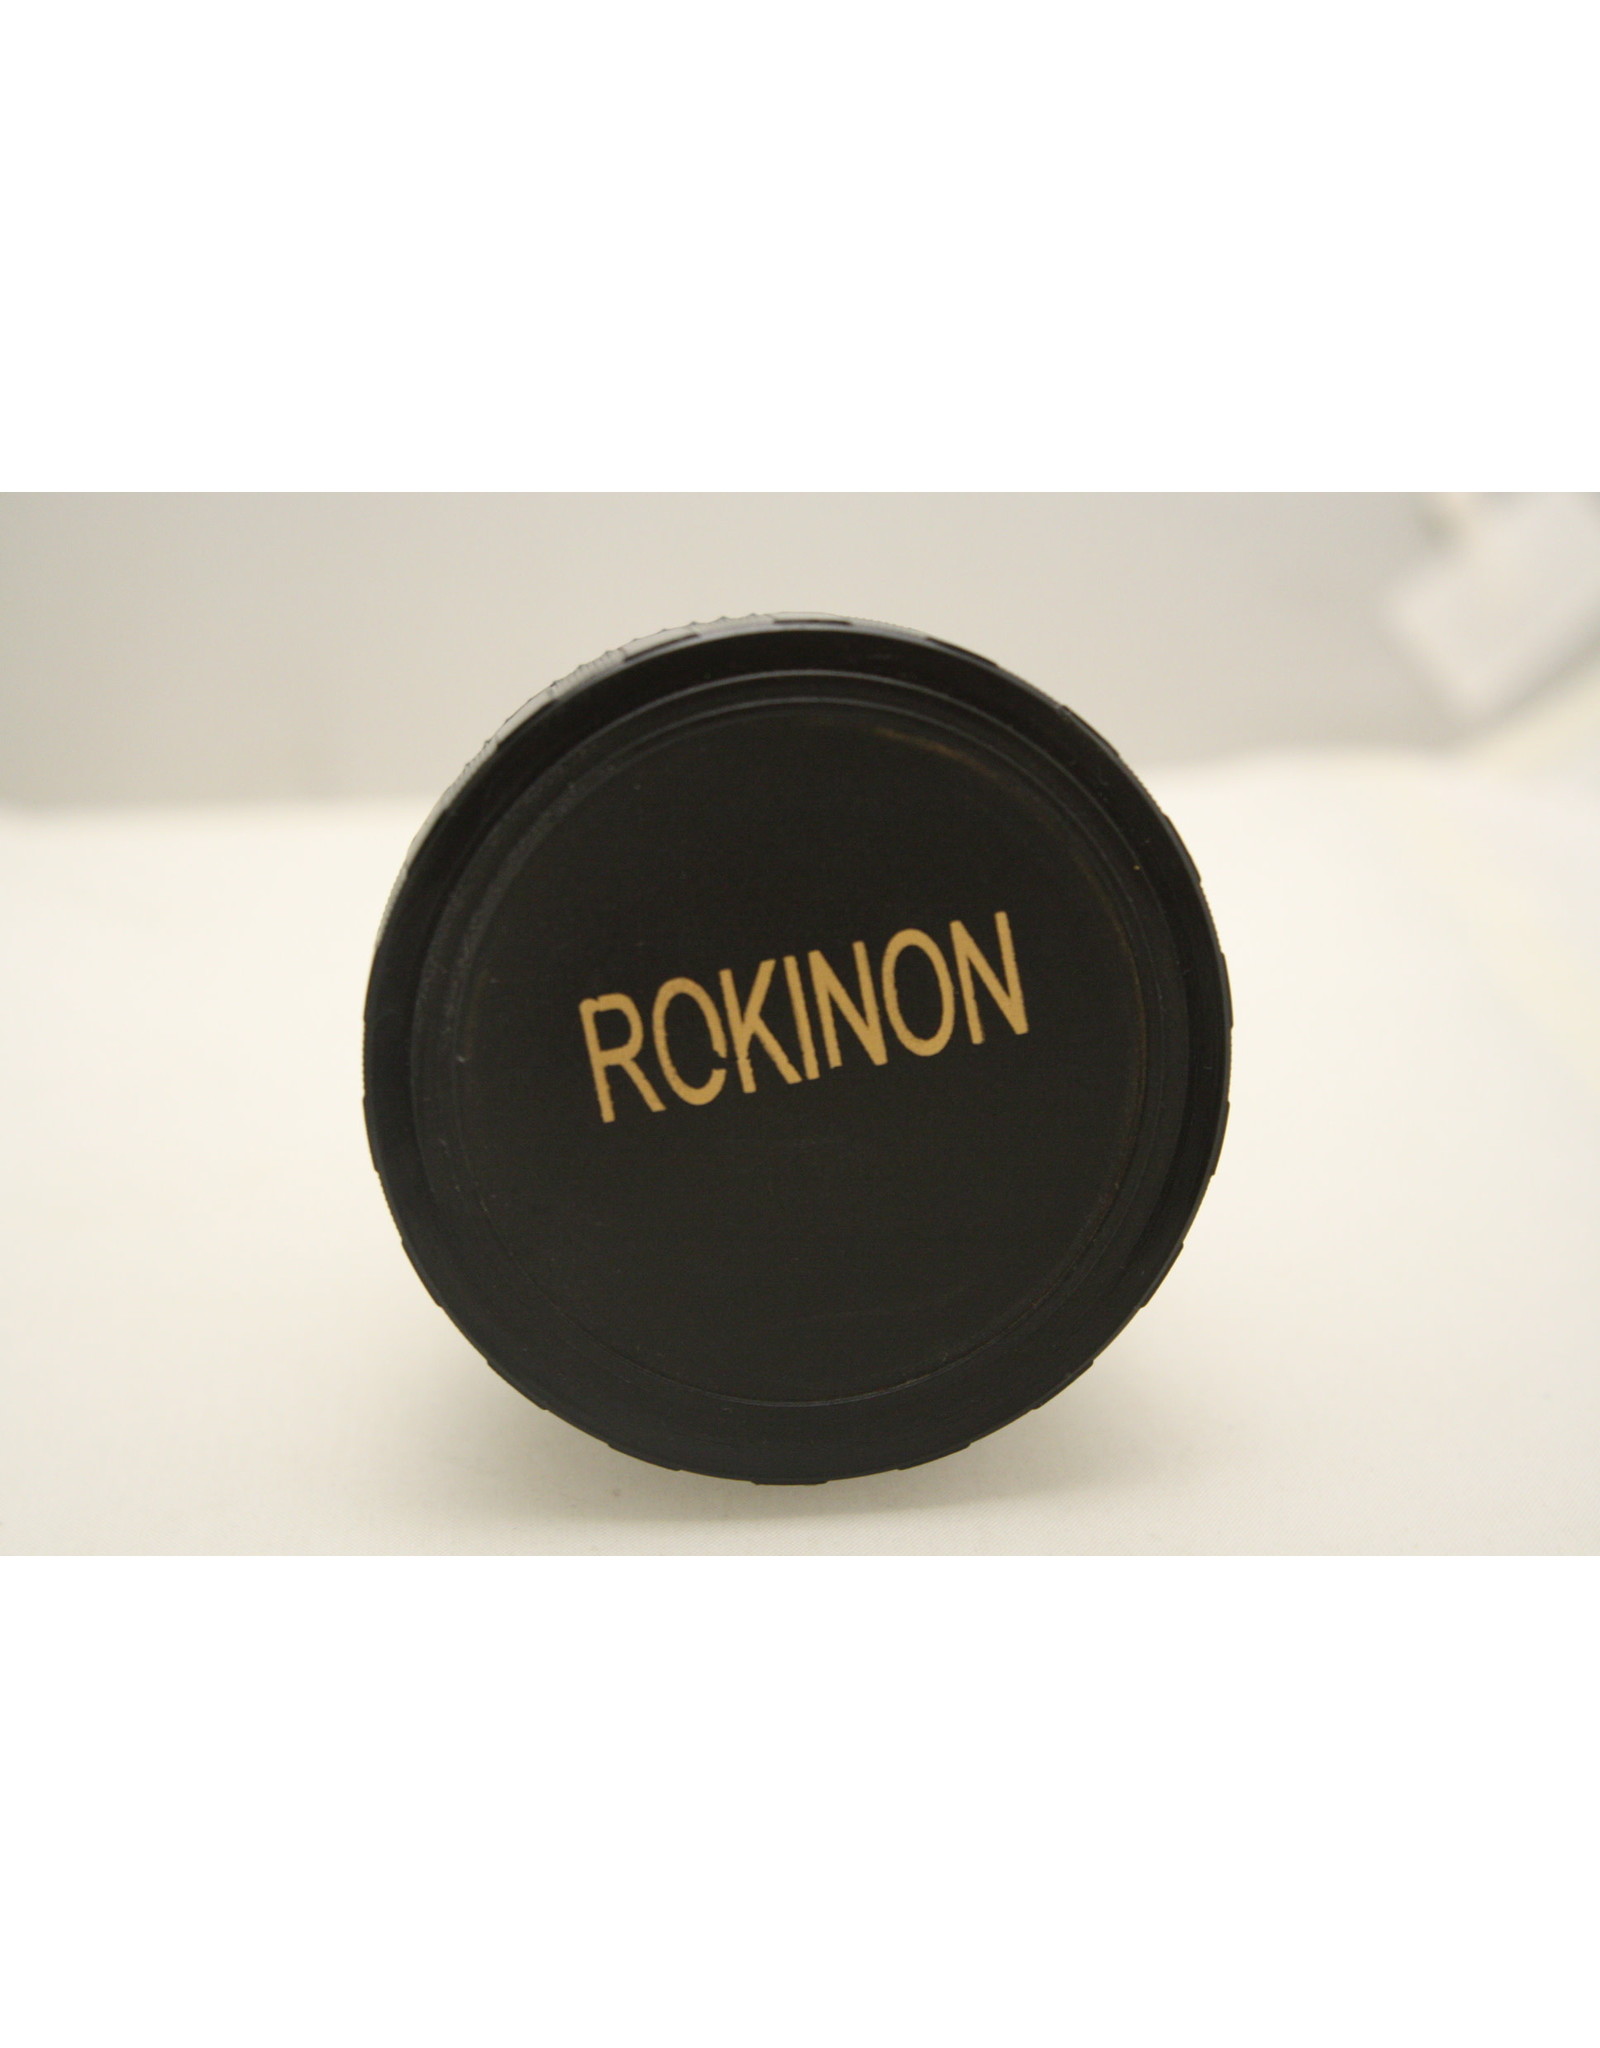 Rokinon Super Wide Fish-eye AF Lens 0.2x for Digital 52mm Thread (Pre-owned)